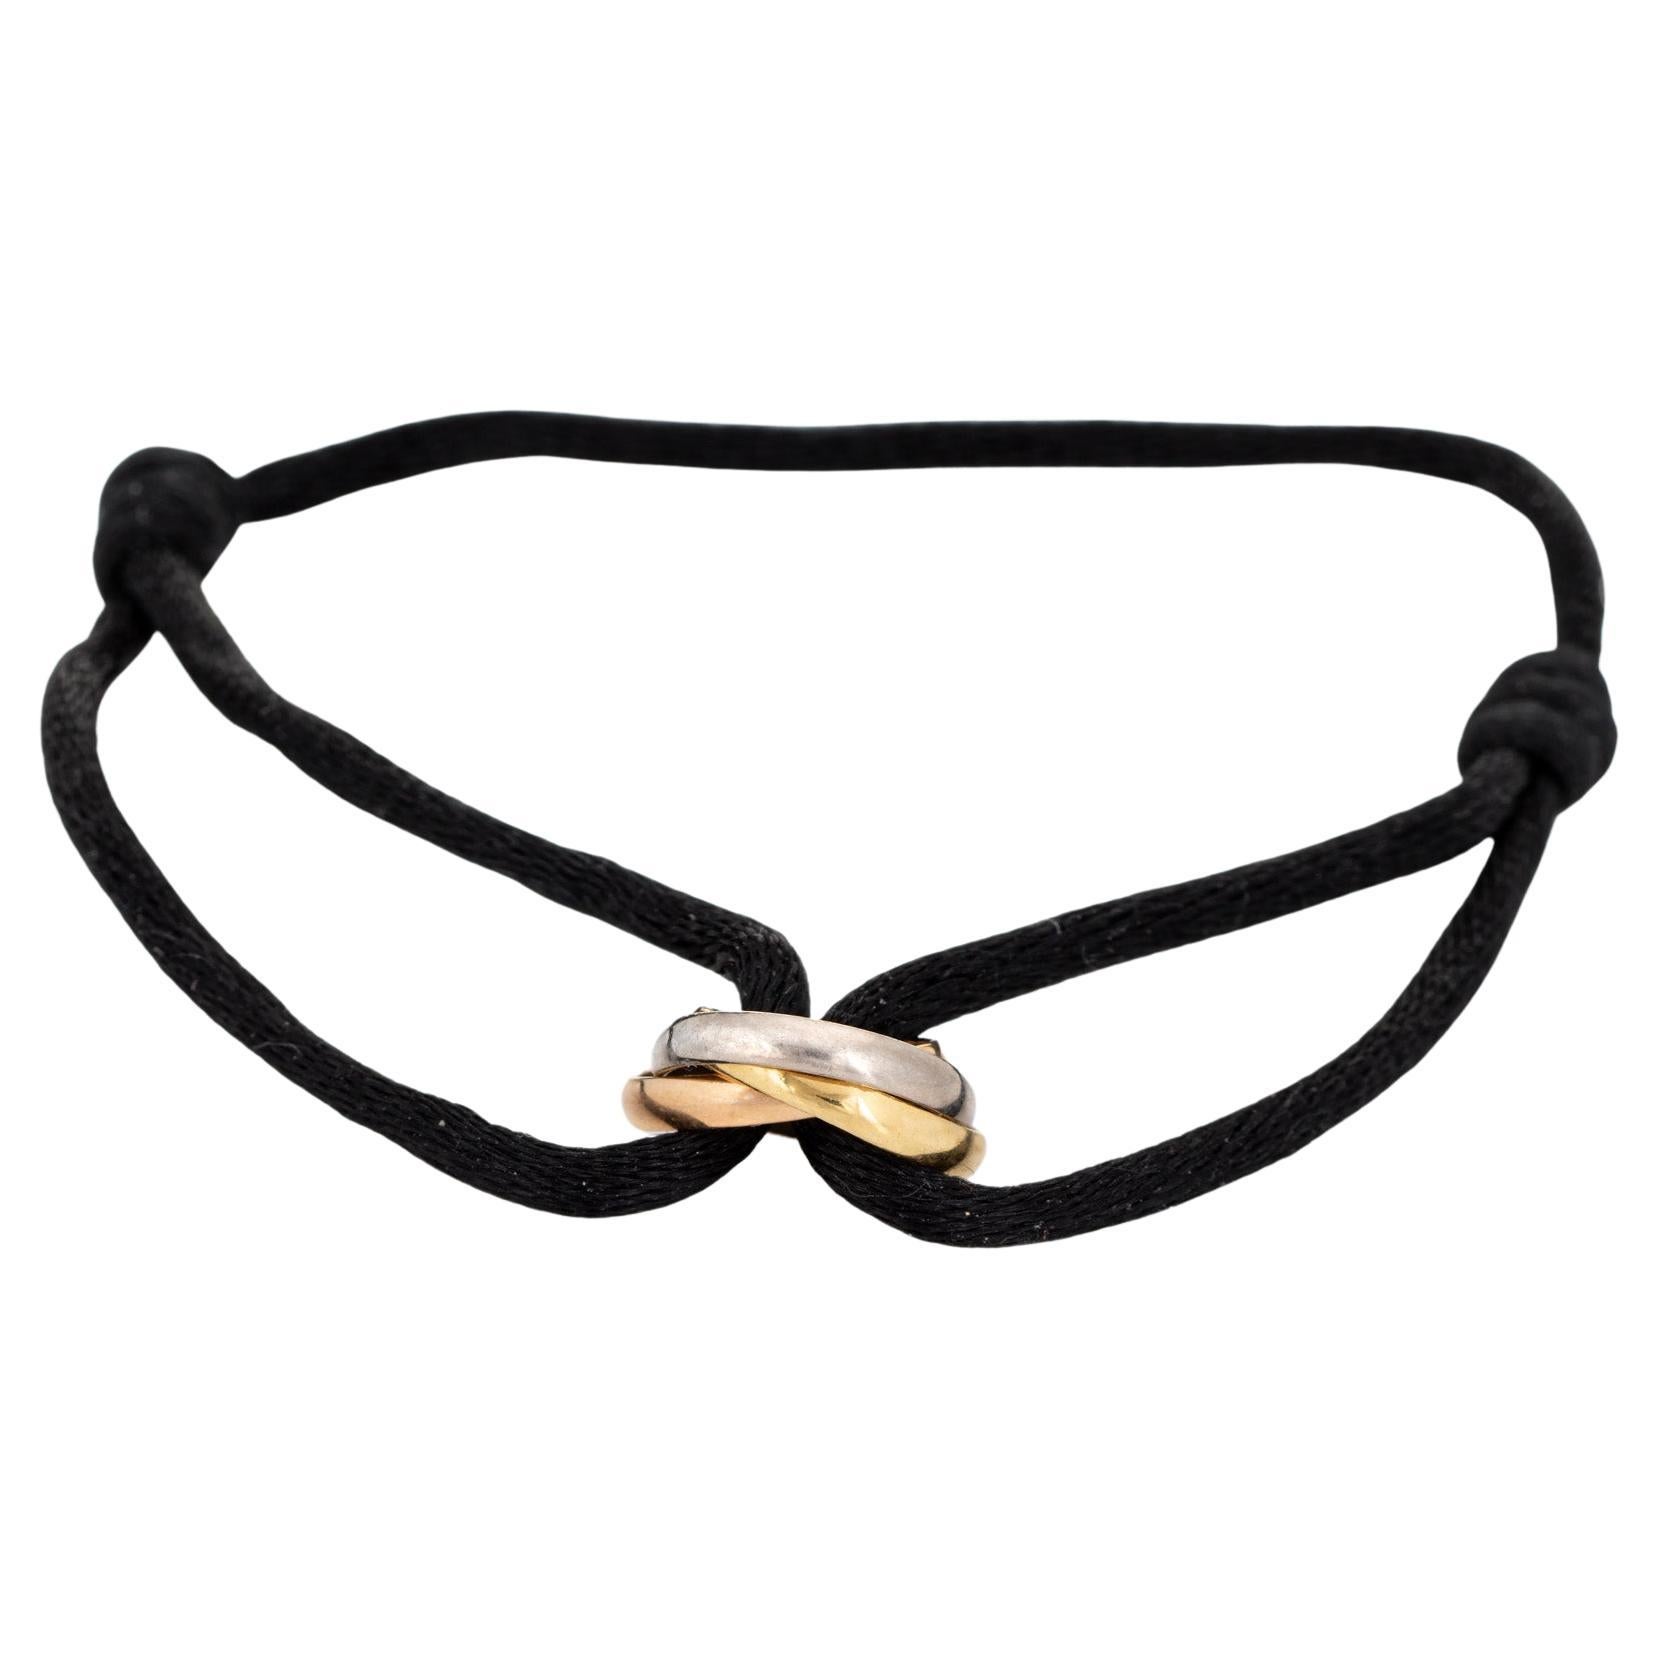 Cartier Trinity Bracelet Black Silk Cord 18k Gold Estate Jewelry Adjustable